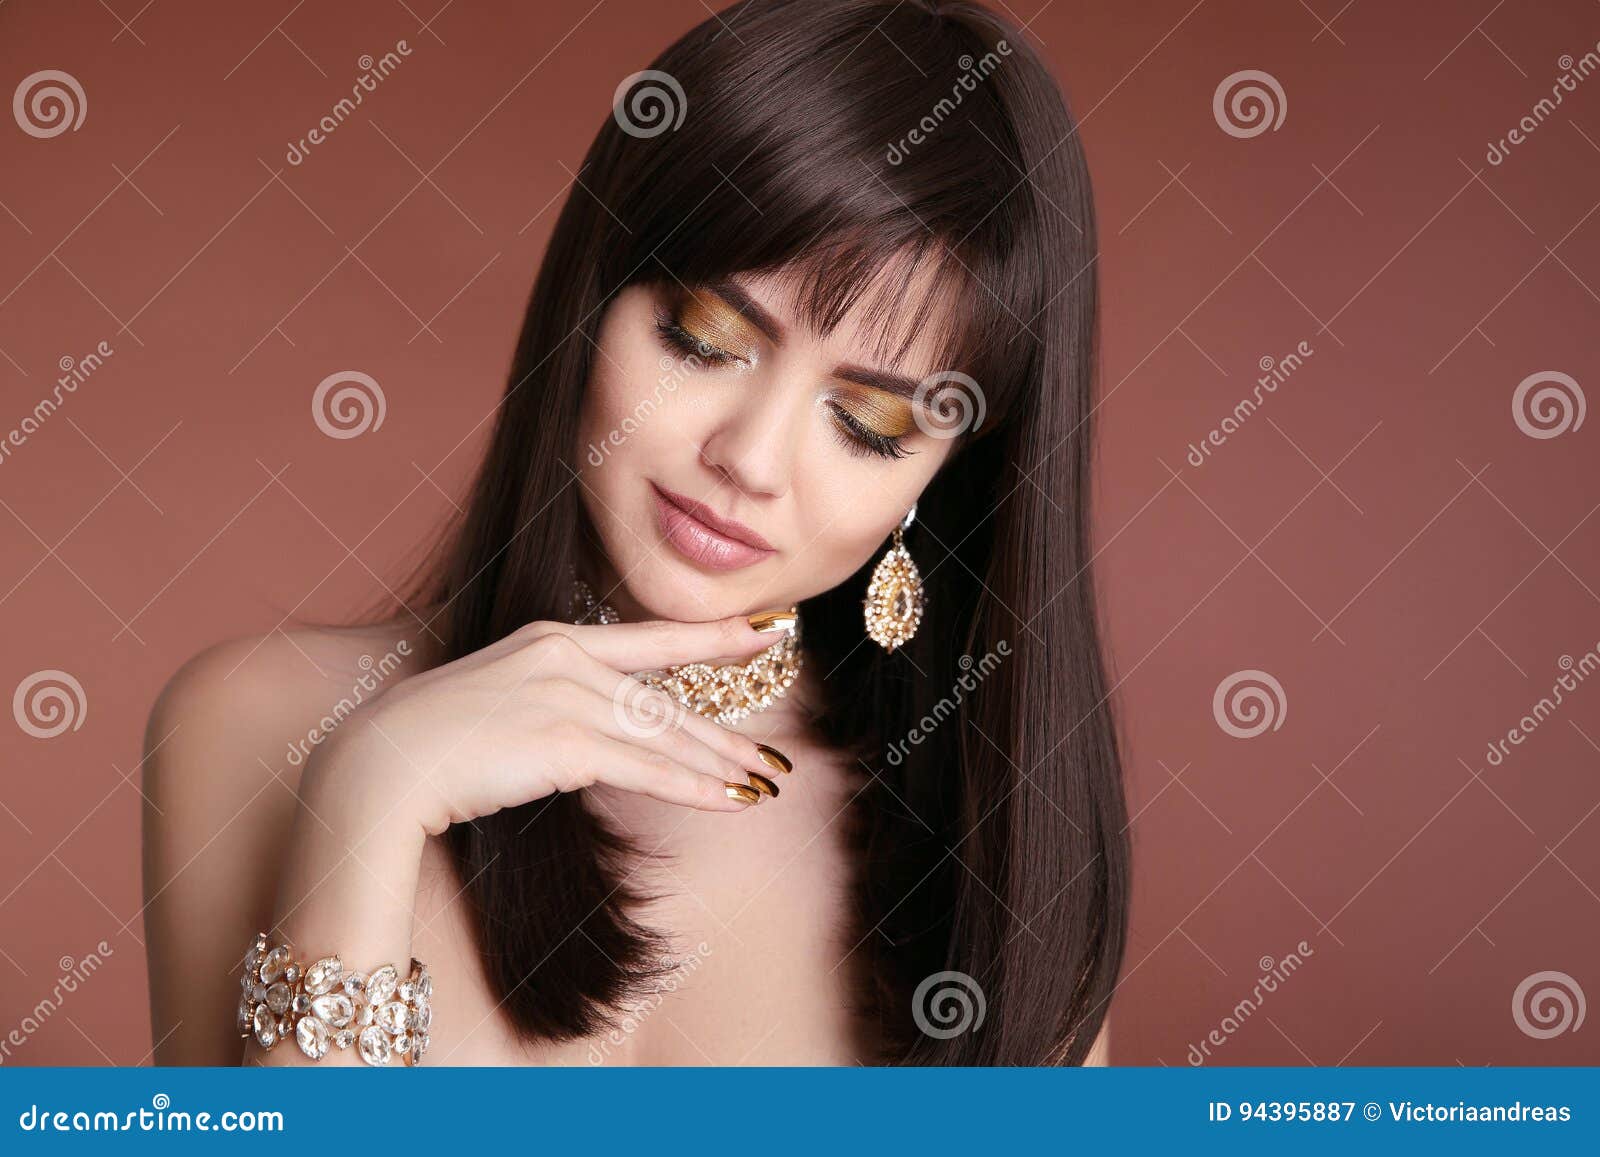 Nails Manicure Beauty Girl Brunette Portrait Fashion Golden Jewelry 